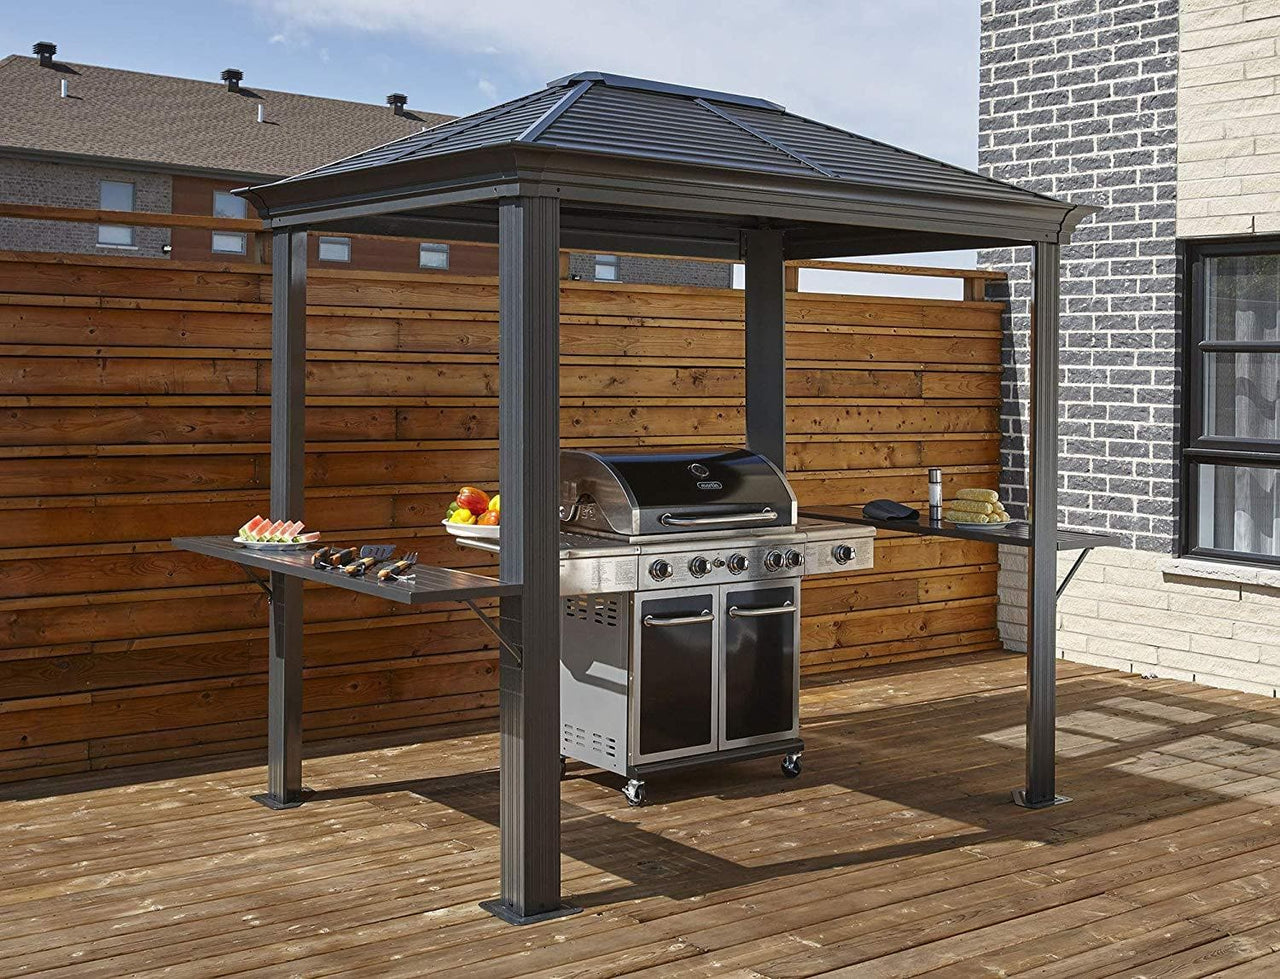 Sojag Mykonos Hardtop Grill Gazebo with Shelving Outdoor Sun Shelter - 5' x 8' - Senior.com Gazebo